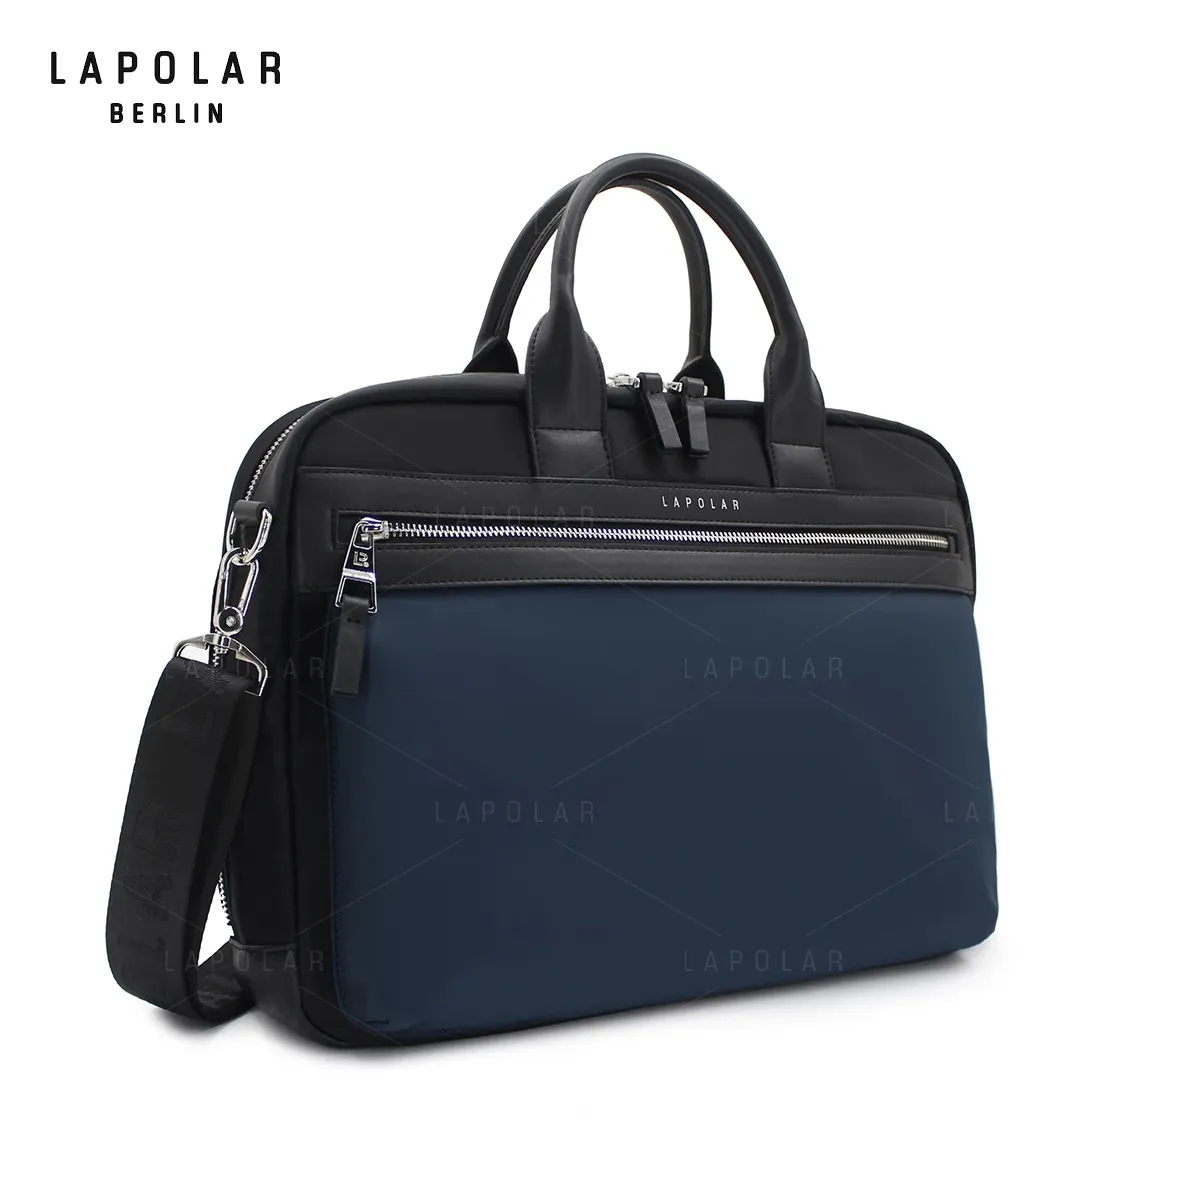 LAPOLAR Luxury Brand Business Handbag Factory Price Manufacture Handbag Male Fashion Designer Handbags